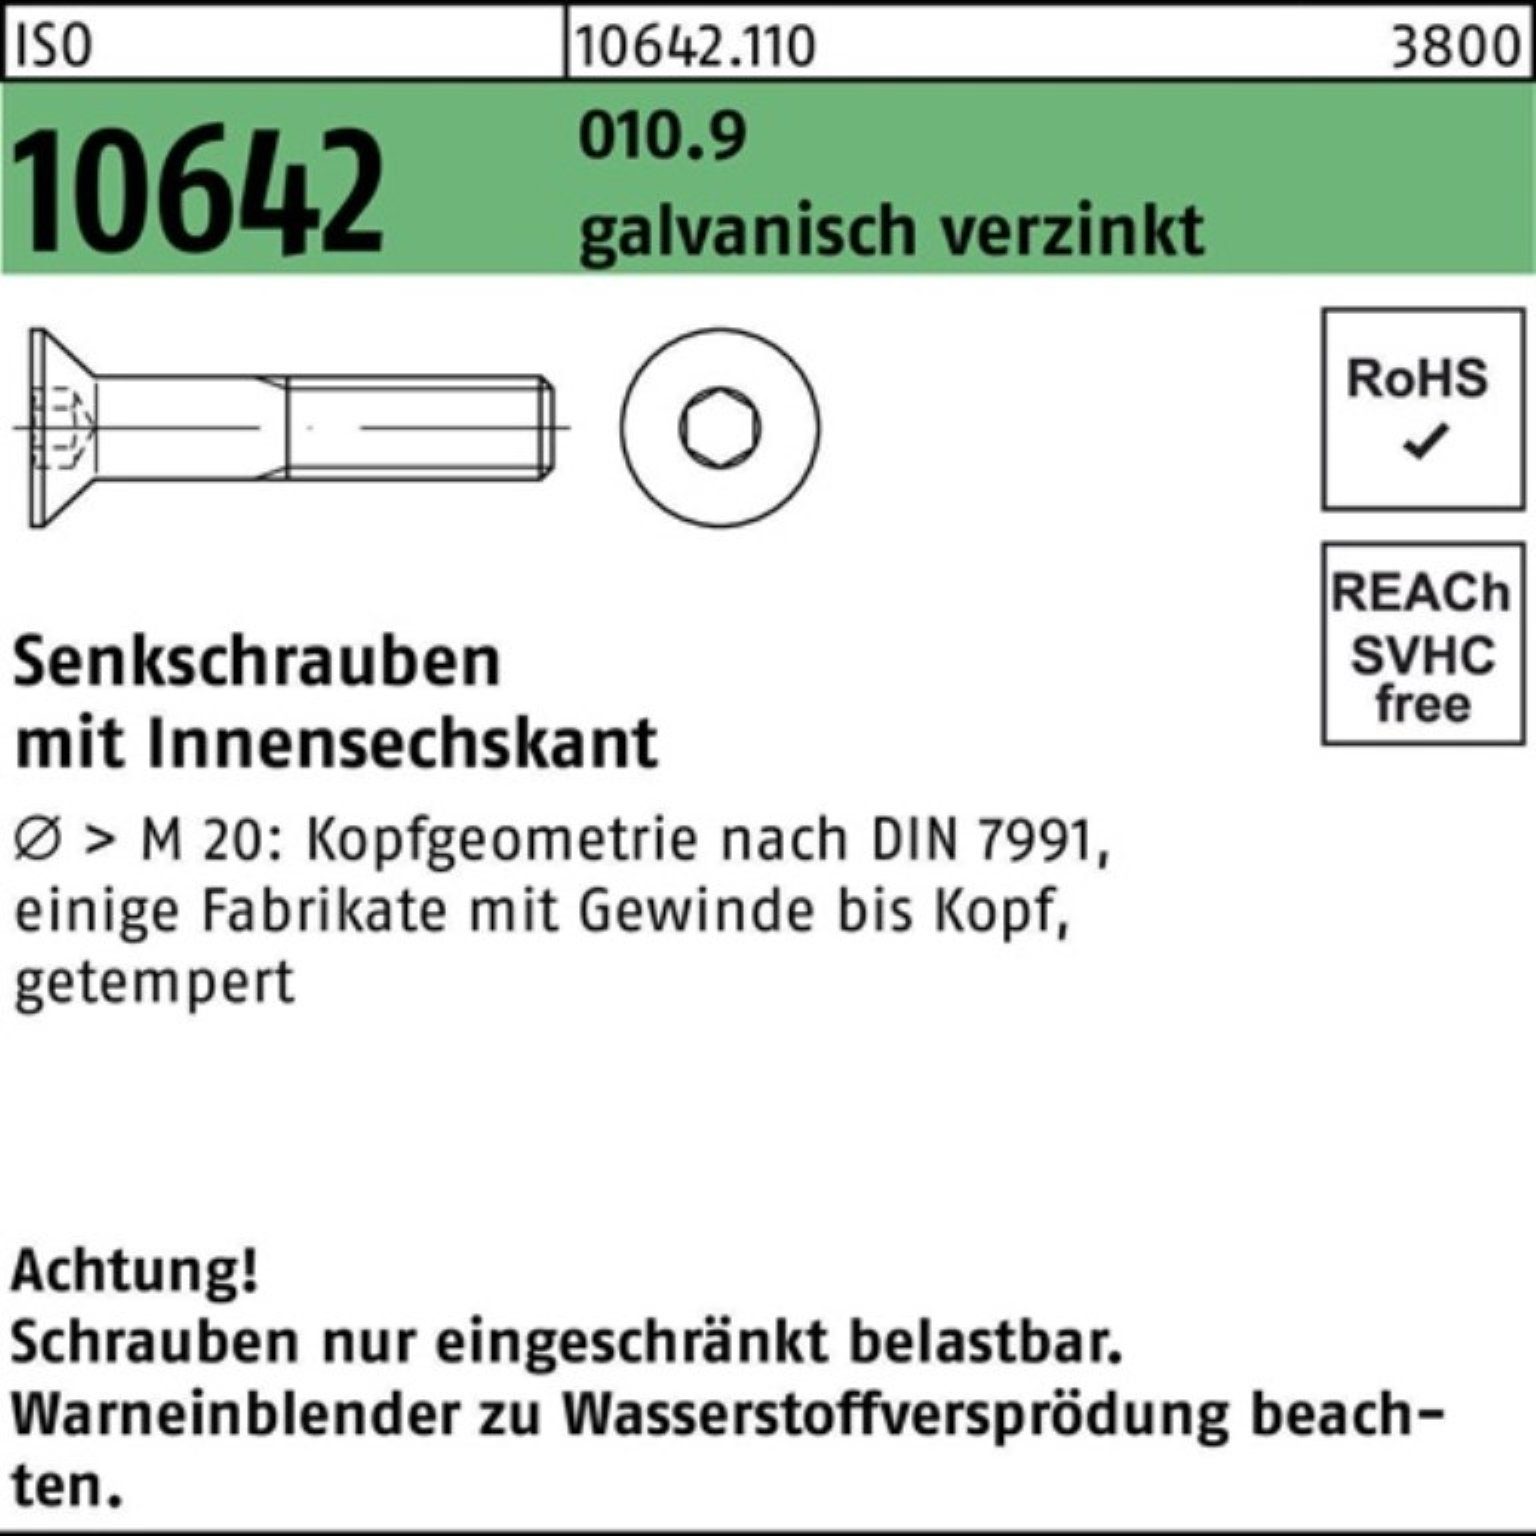 Reyher Senkschraube 200er Pack Senkschraube ISO 10642 Innen-6kt M6x 55 010.9 galv.verz. 20